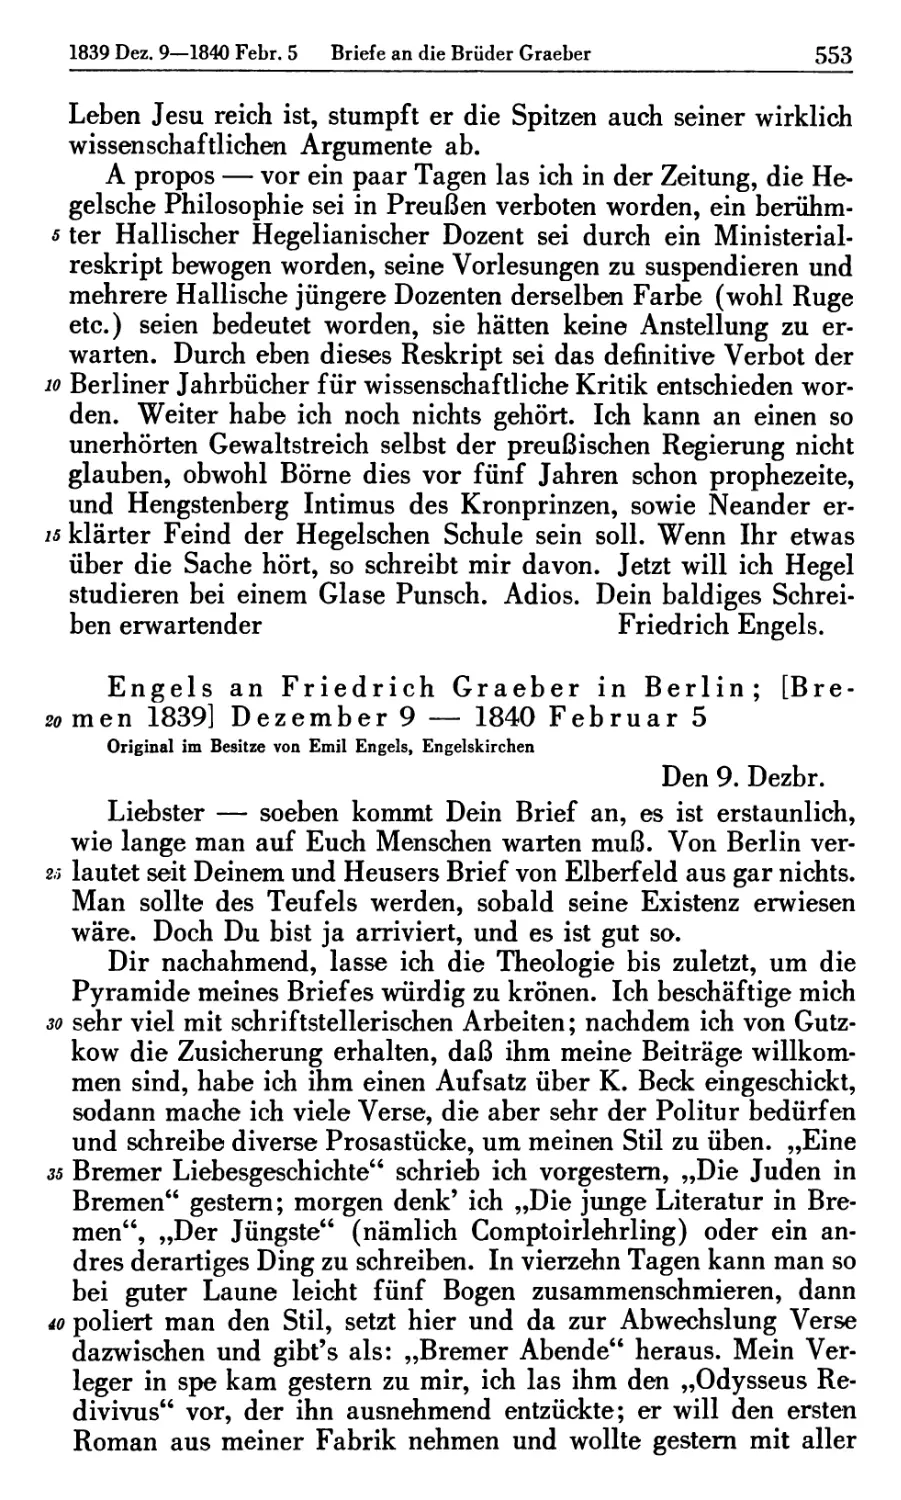 Engels an Friedrich Graeber in Berlin; [Bremen 1839] Dezember 9 — 1840 Februar 5